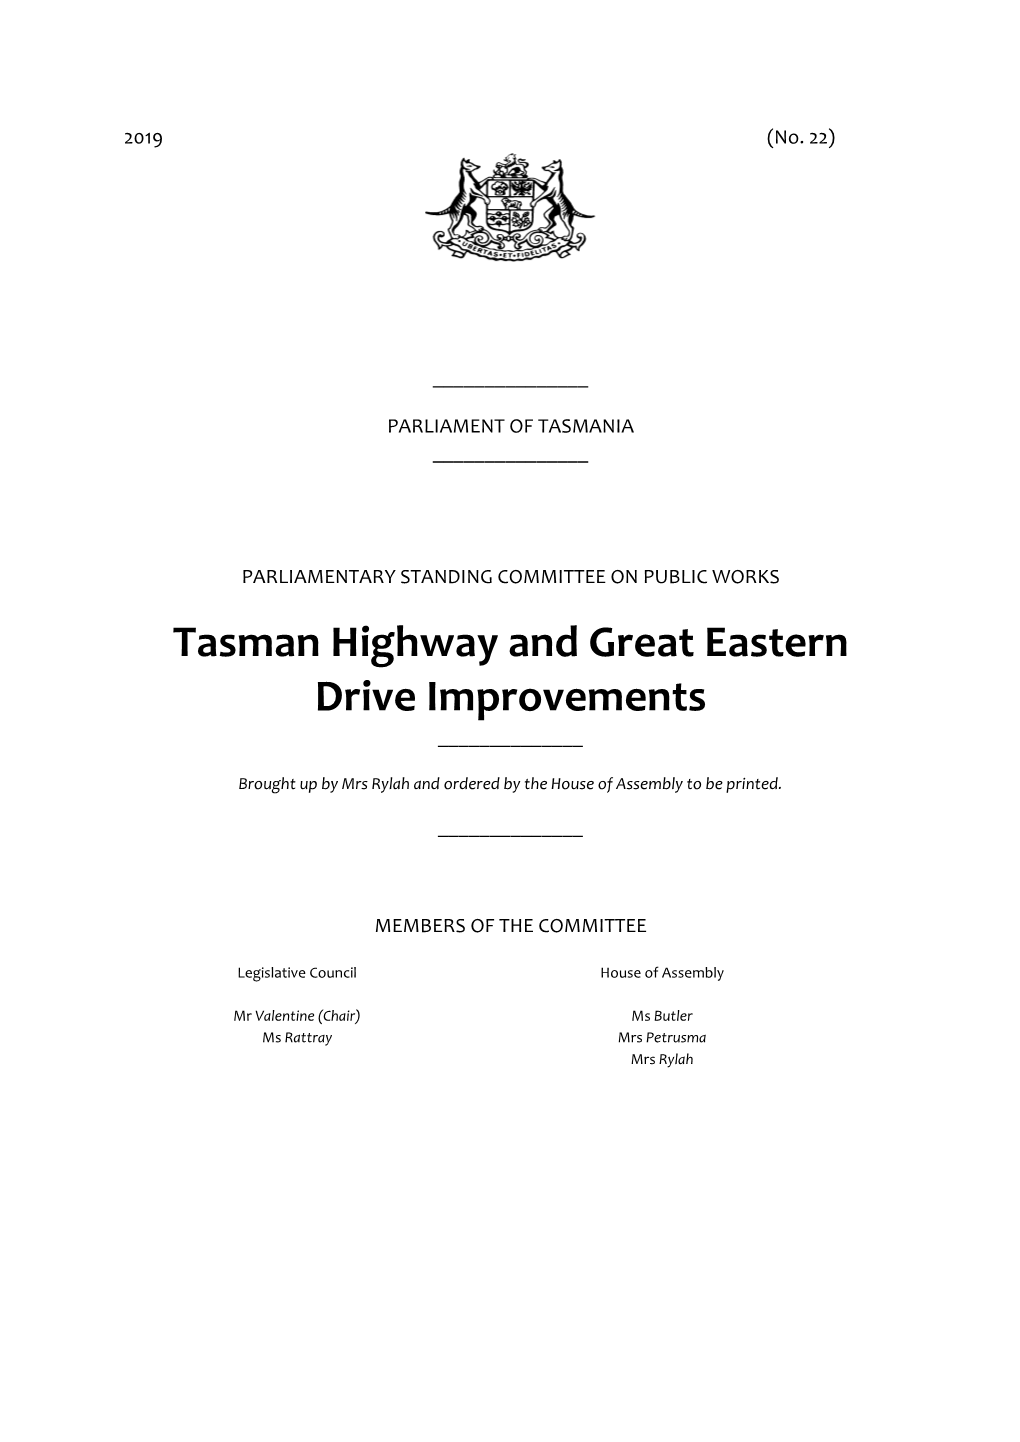 Tasman Highway and Great Eastern Drive Improvements